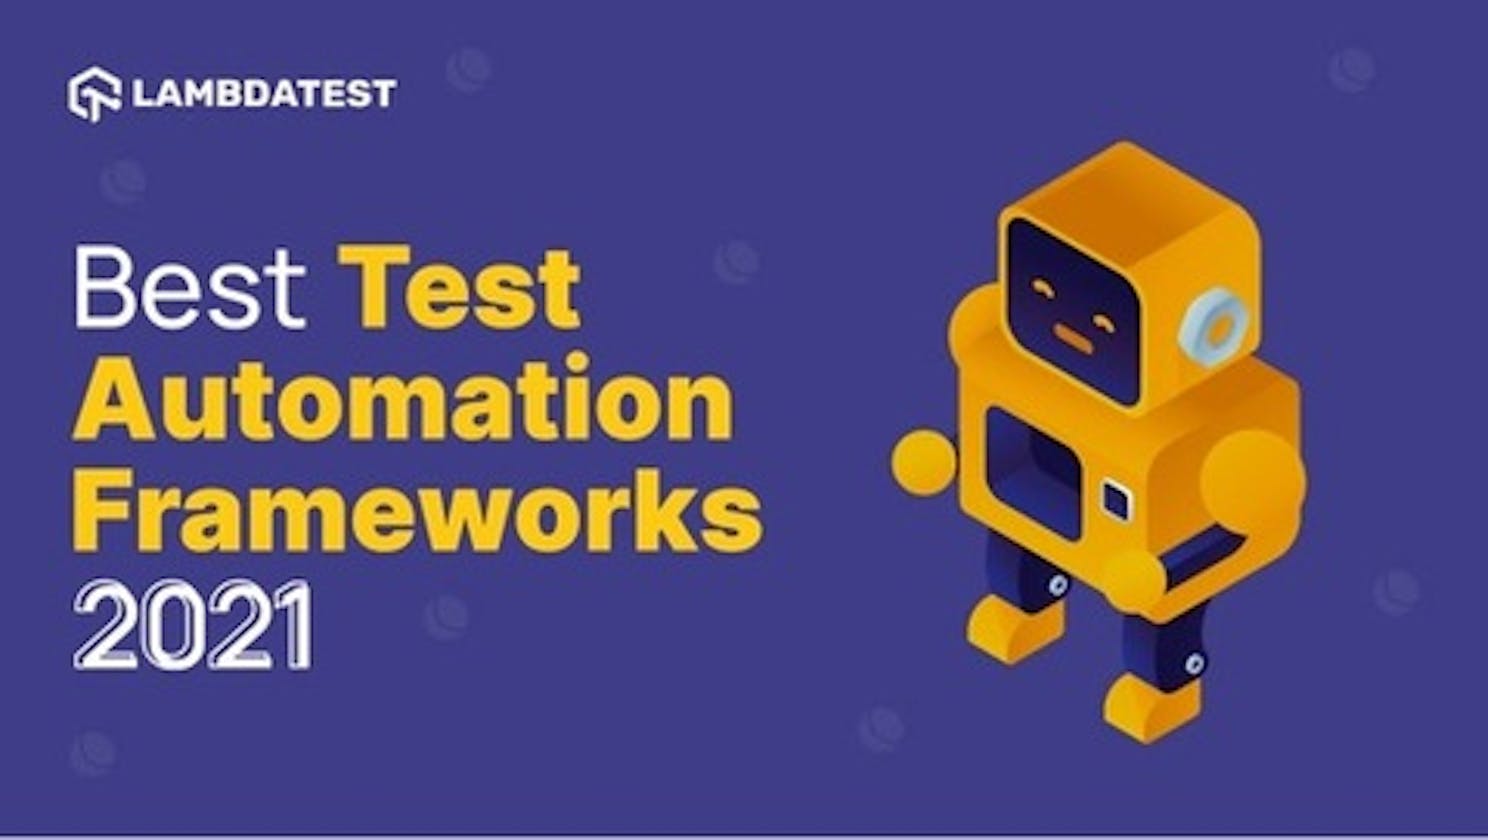 13 Best Test Automation Frameworks: The 2021 List